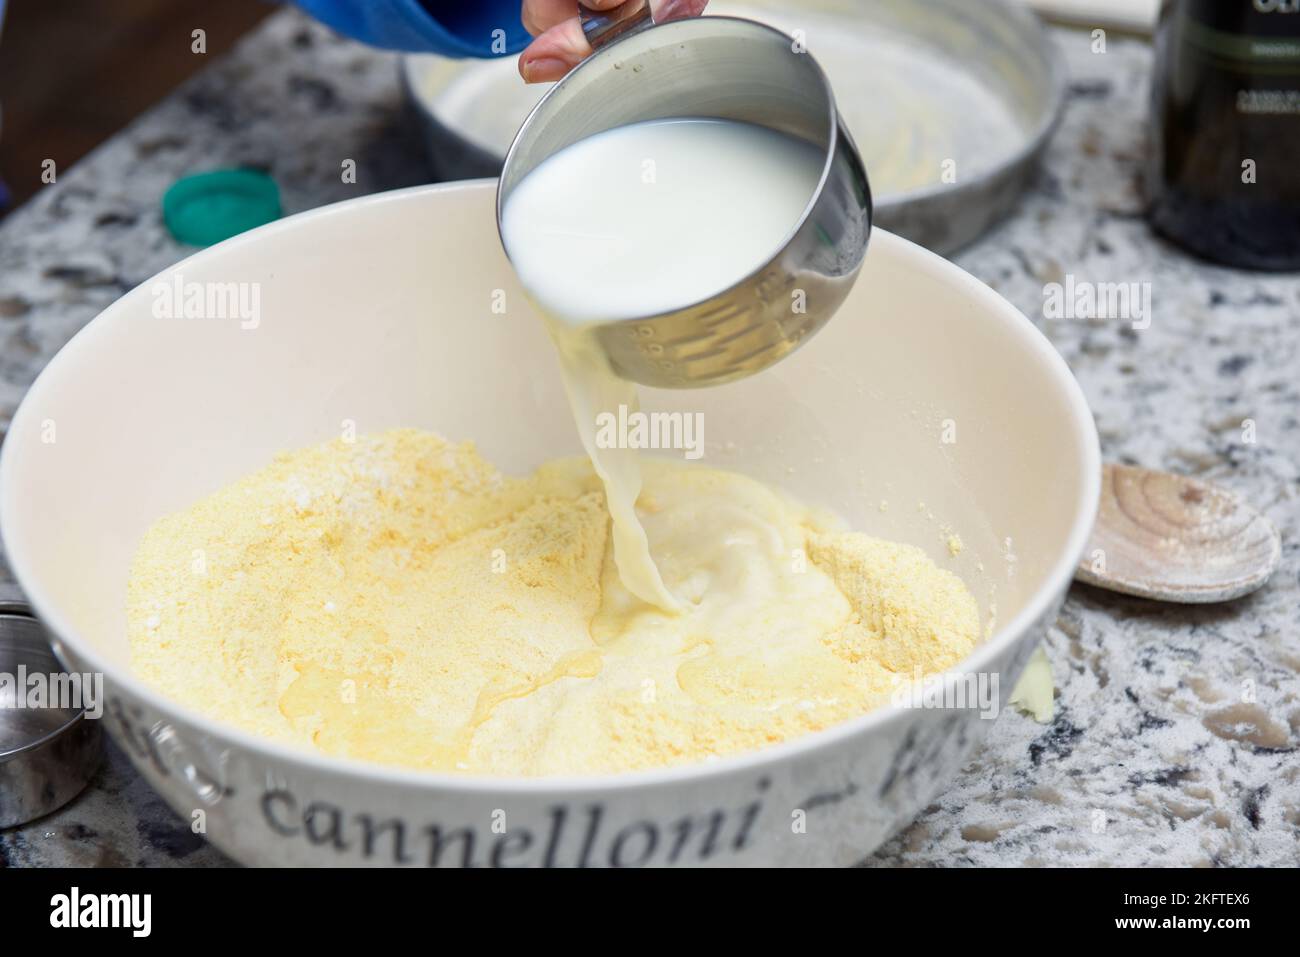 Hornee el pan en casa vertiendo la leche en la mezcla de harina Foto de stock